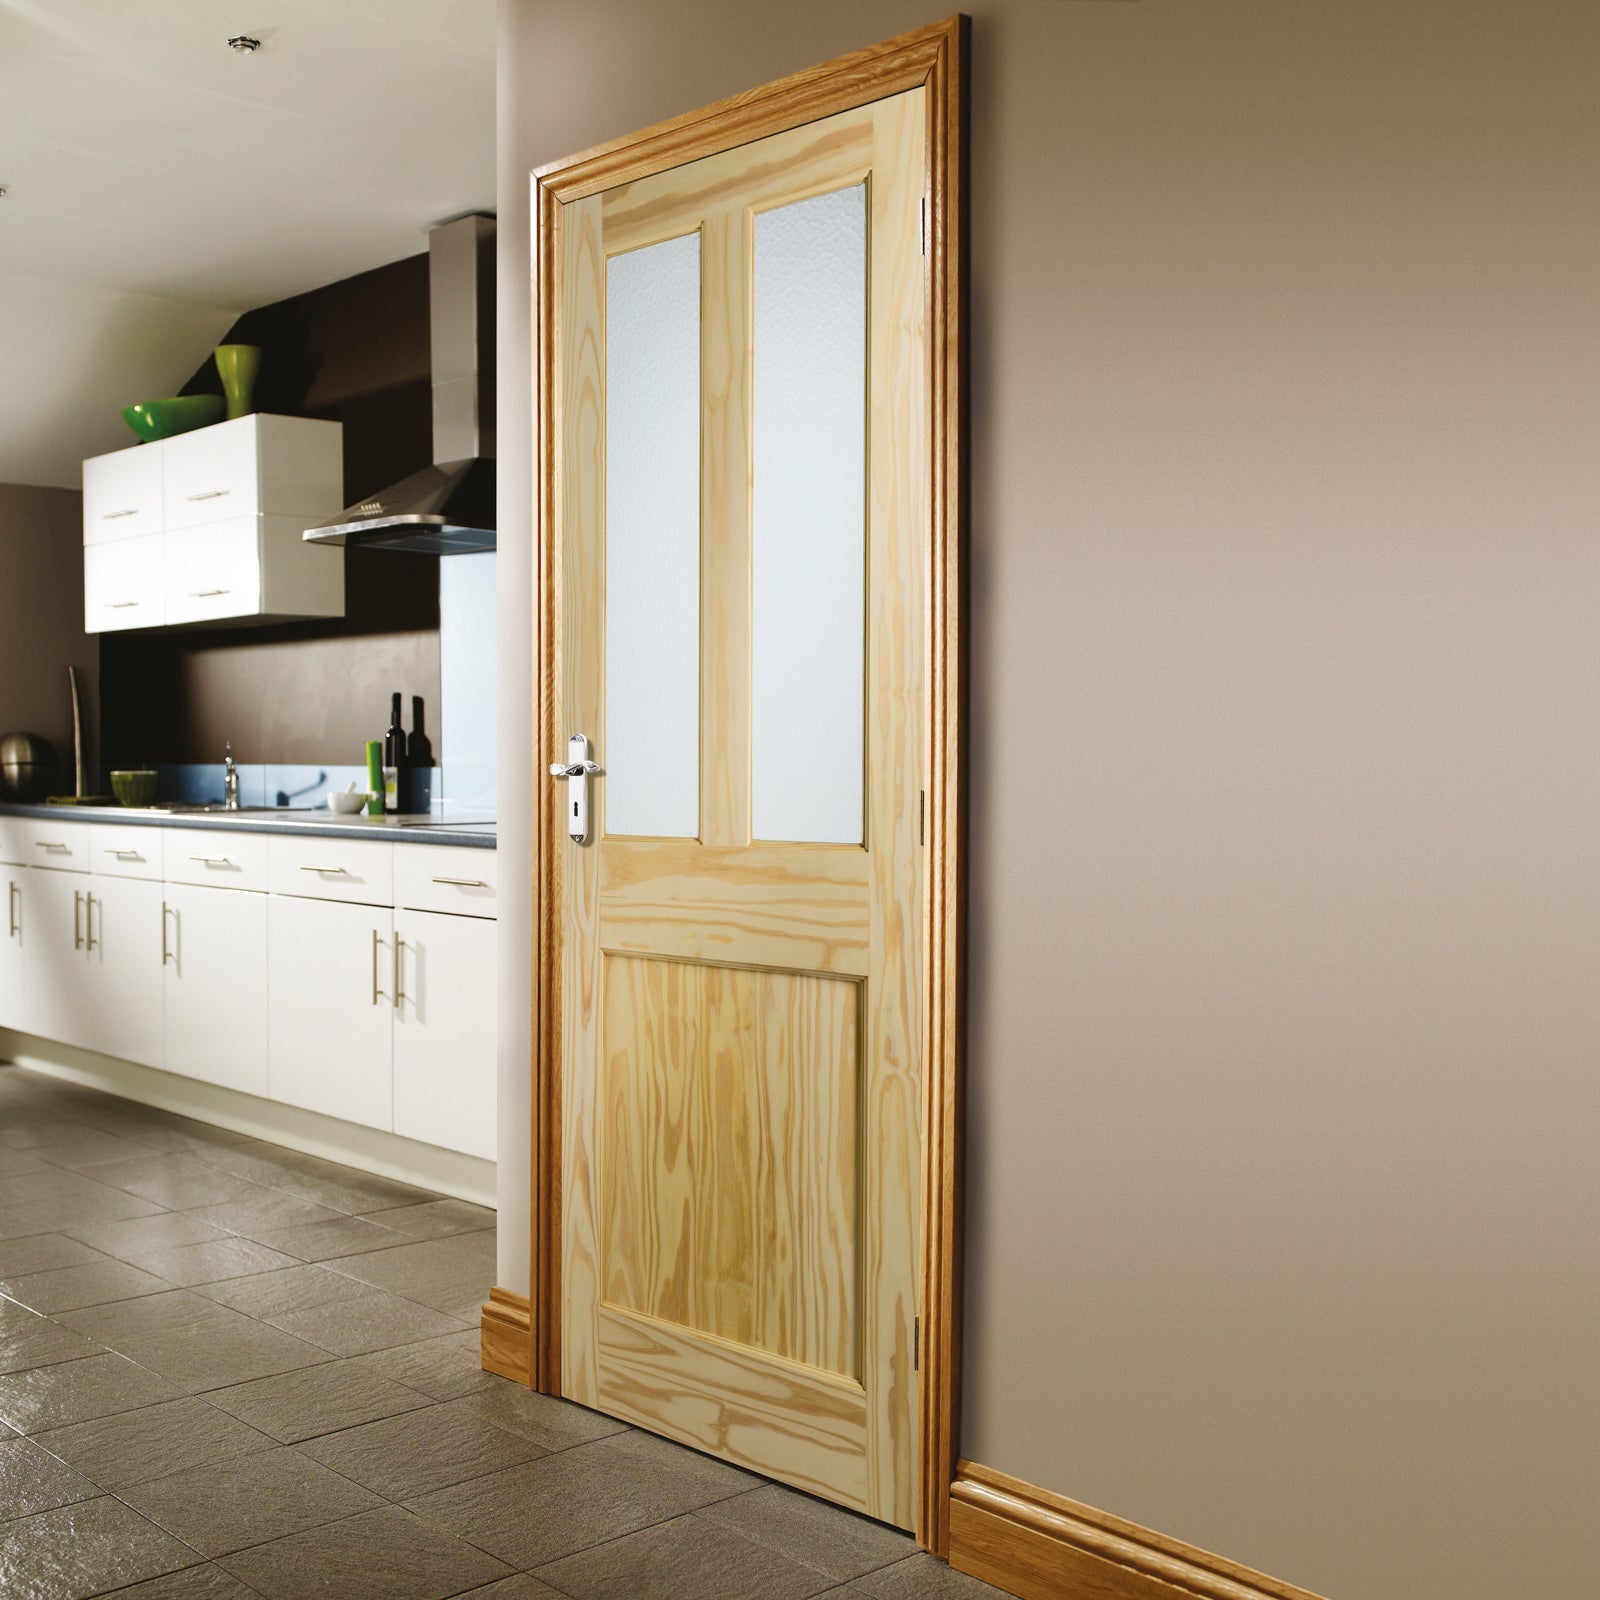 SHOW External Pine Malton Door with Flemish Glass lifestyle